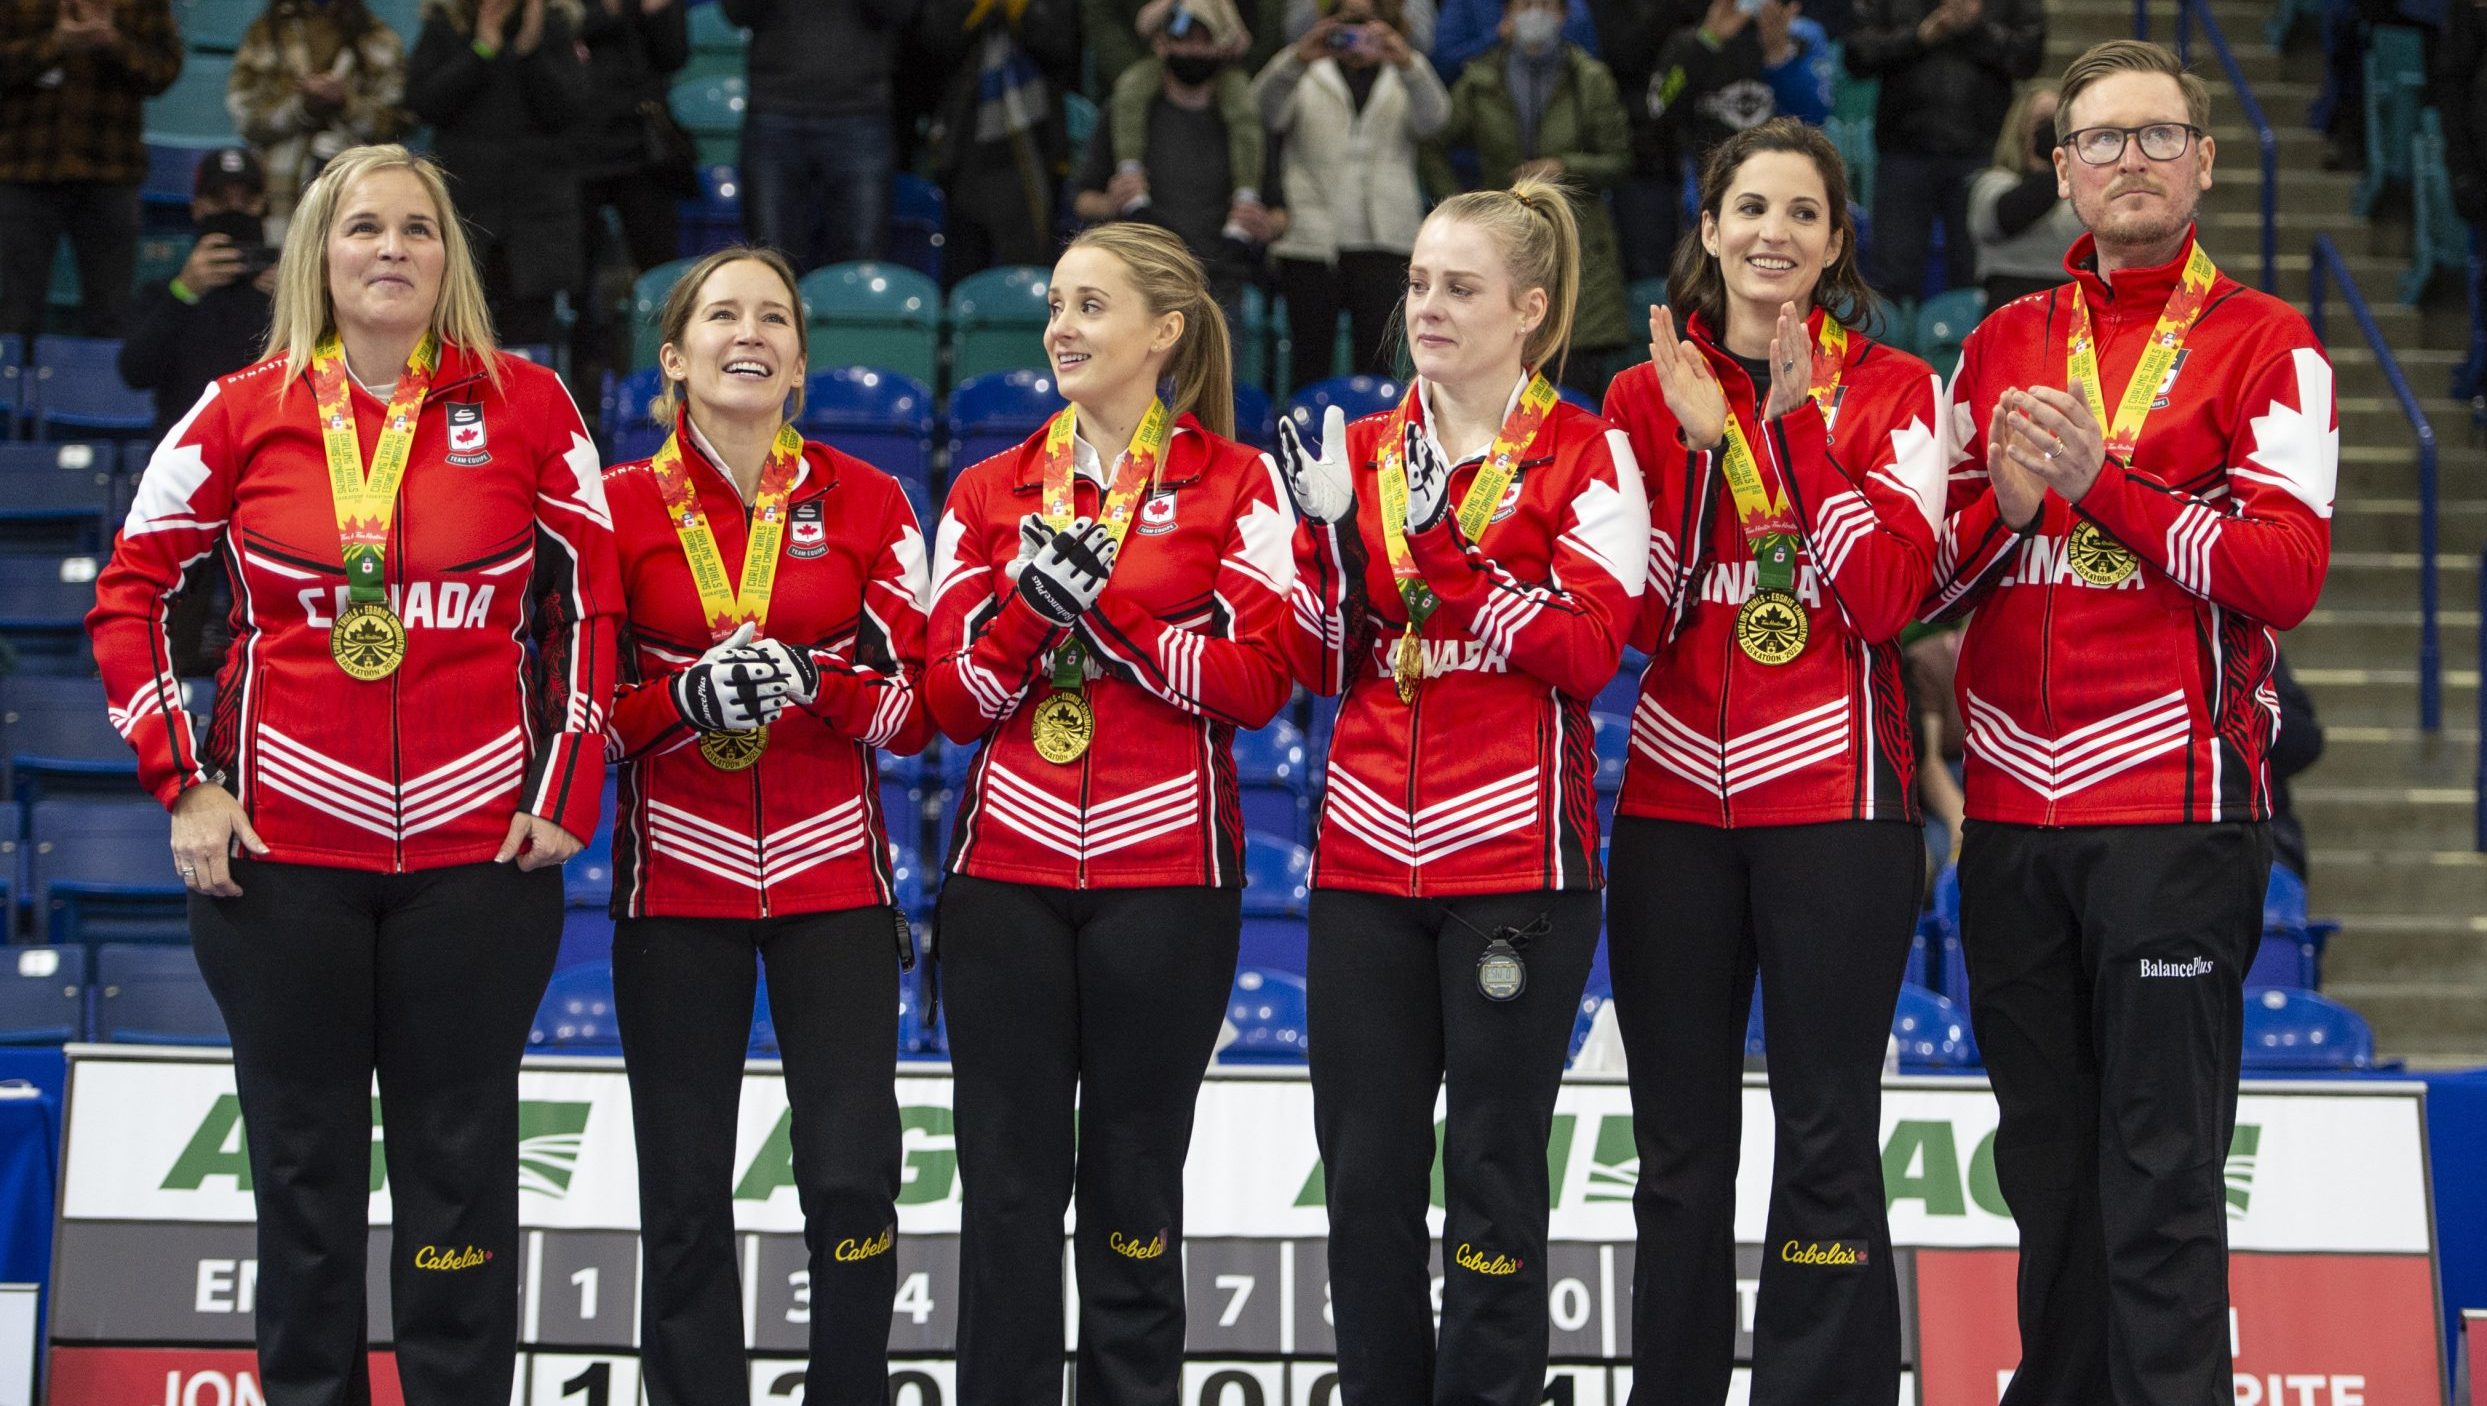 Meet the Curling Team A lightning round with Team Jones - Team Canada